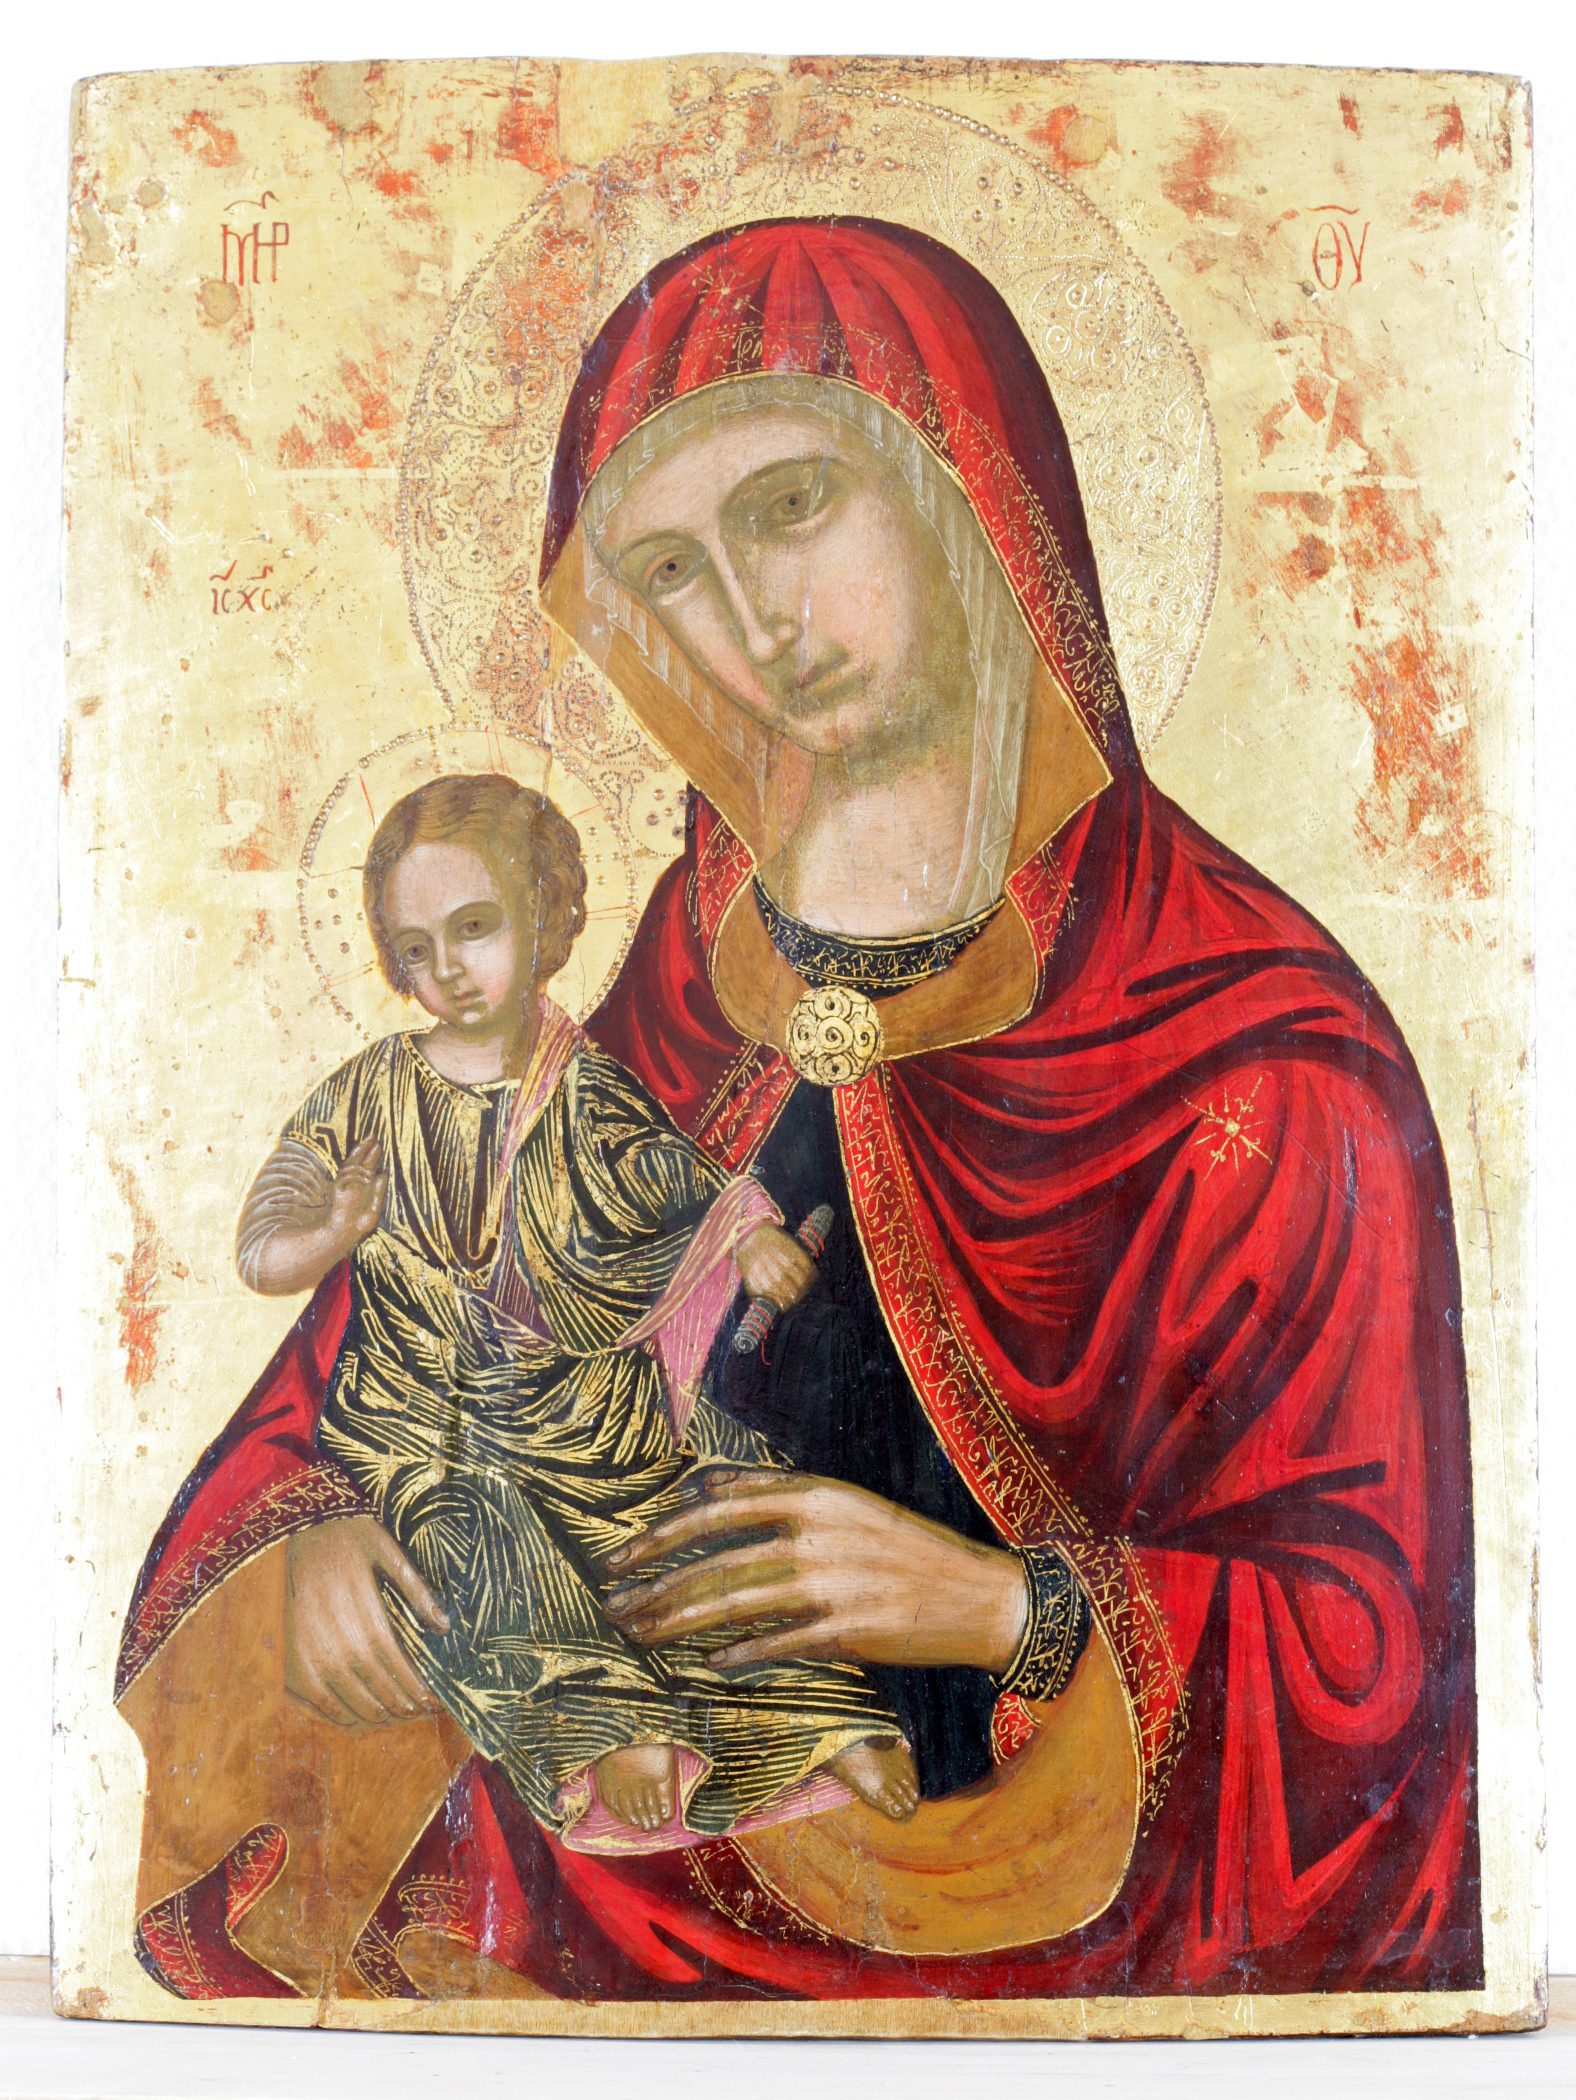 Vergine hodegetria (icona, opera isolata) - scuola cretese-veneziana (sec. XVI- XVII)